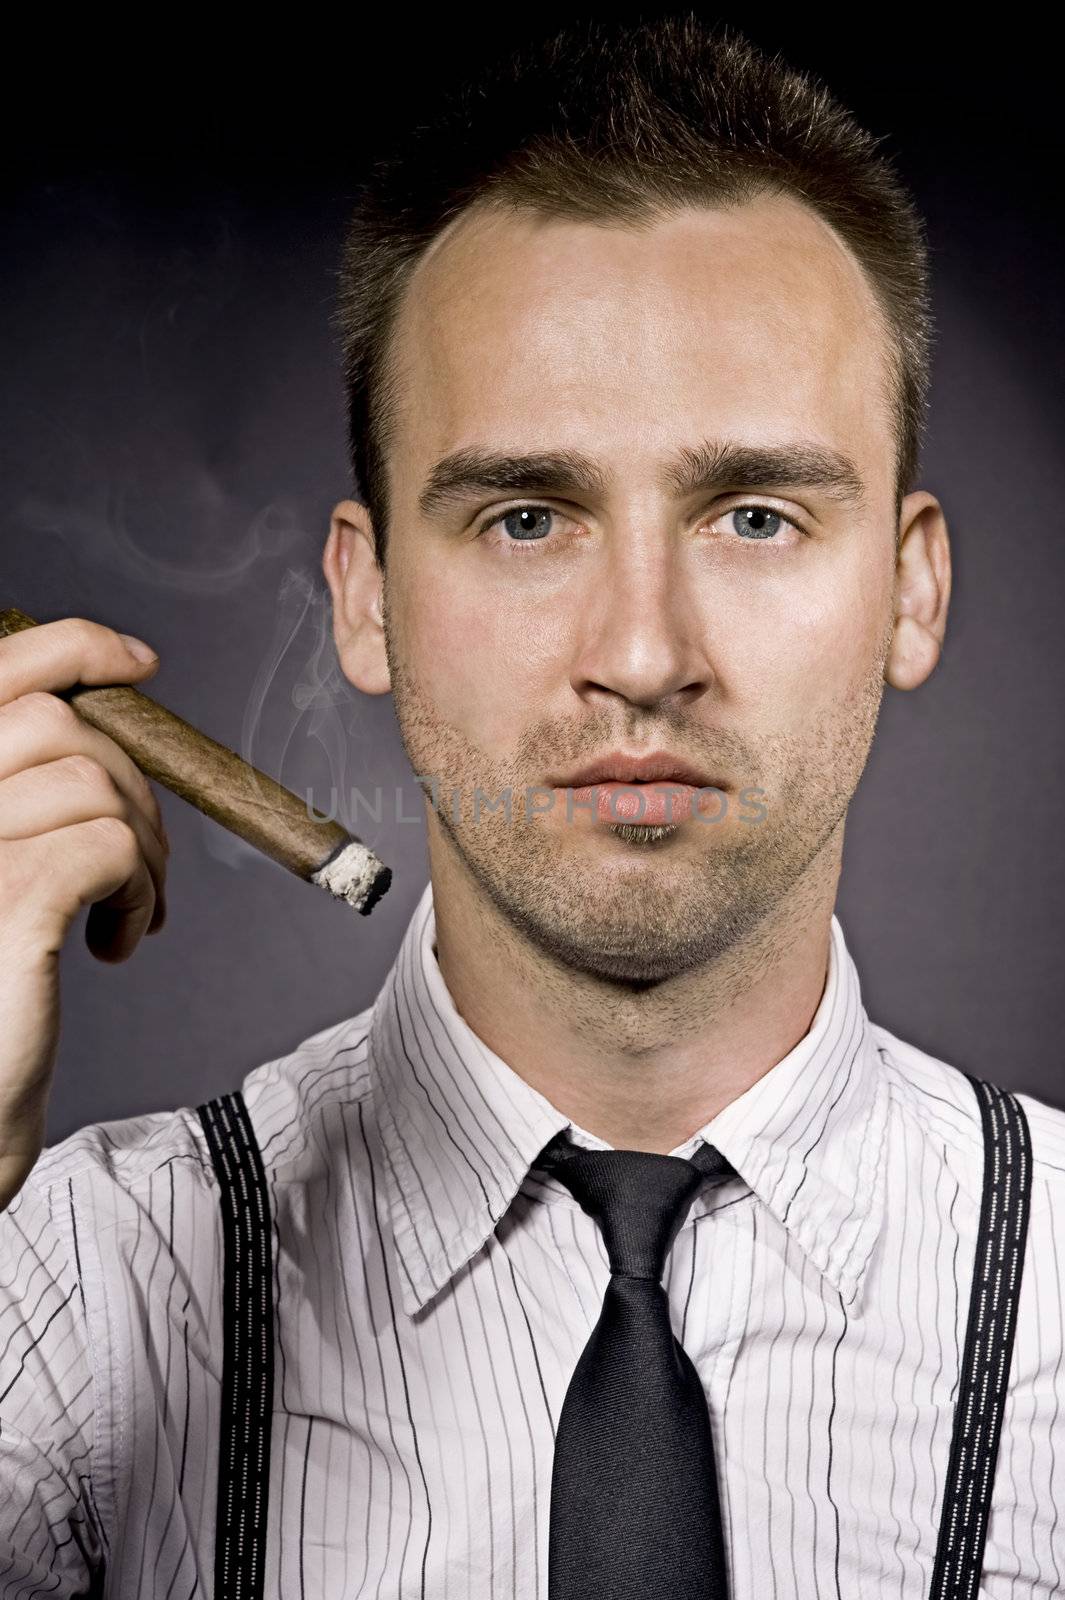 young handsome confident man smoking cigaro